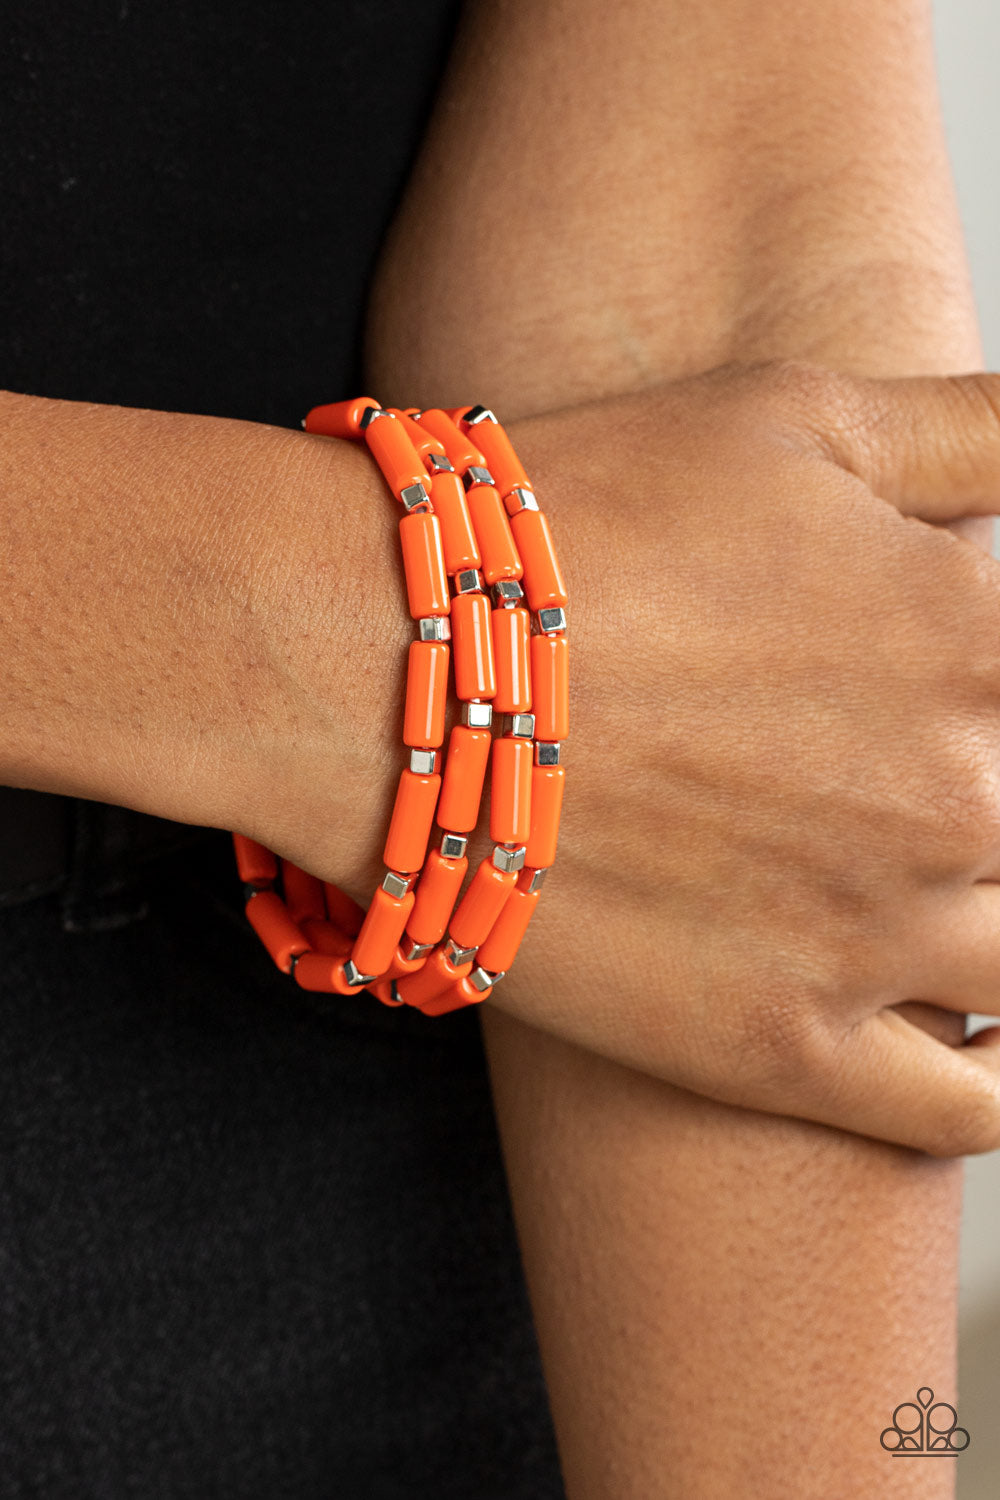 Paparazzi Jewelry Bracelet Radiantly Retro - Orange